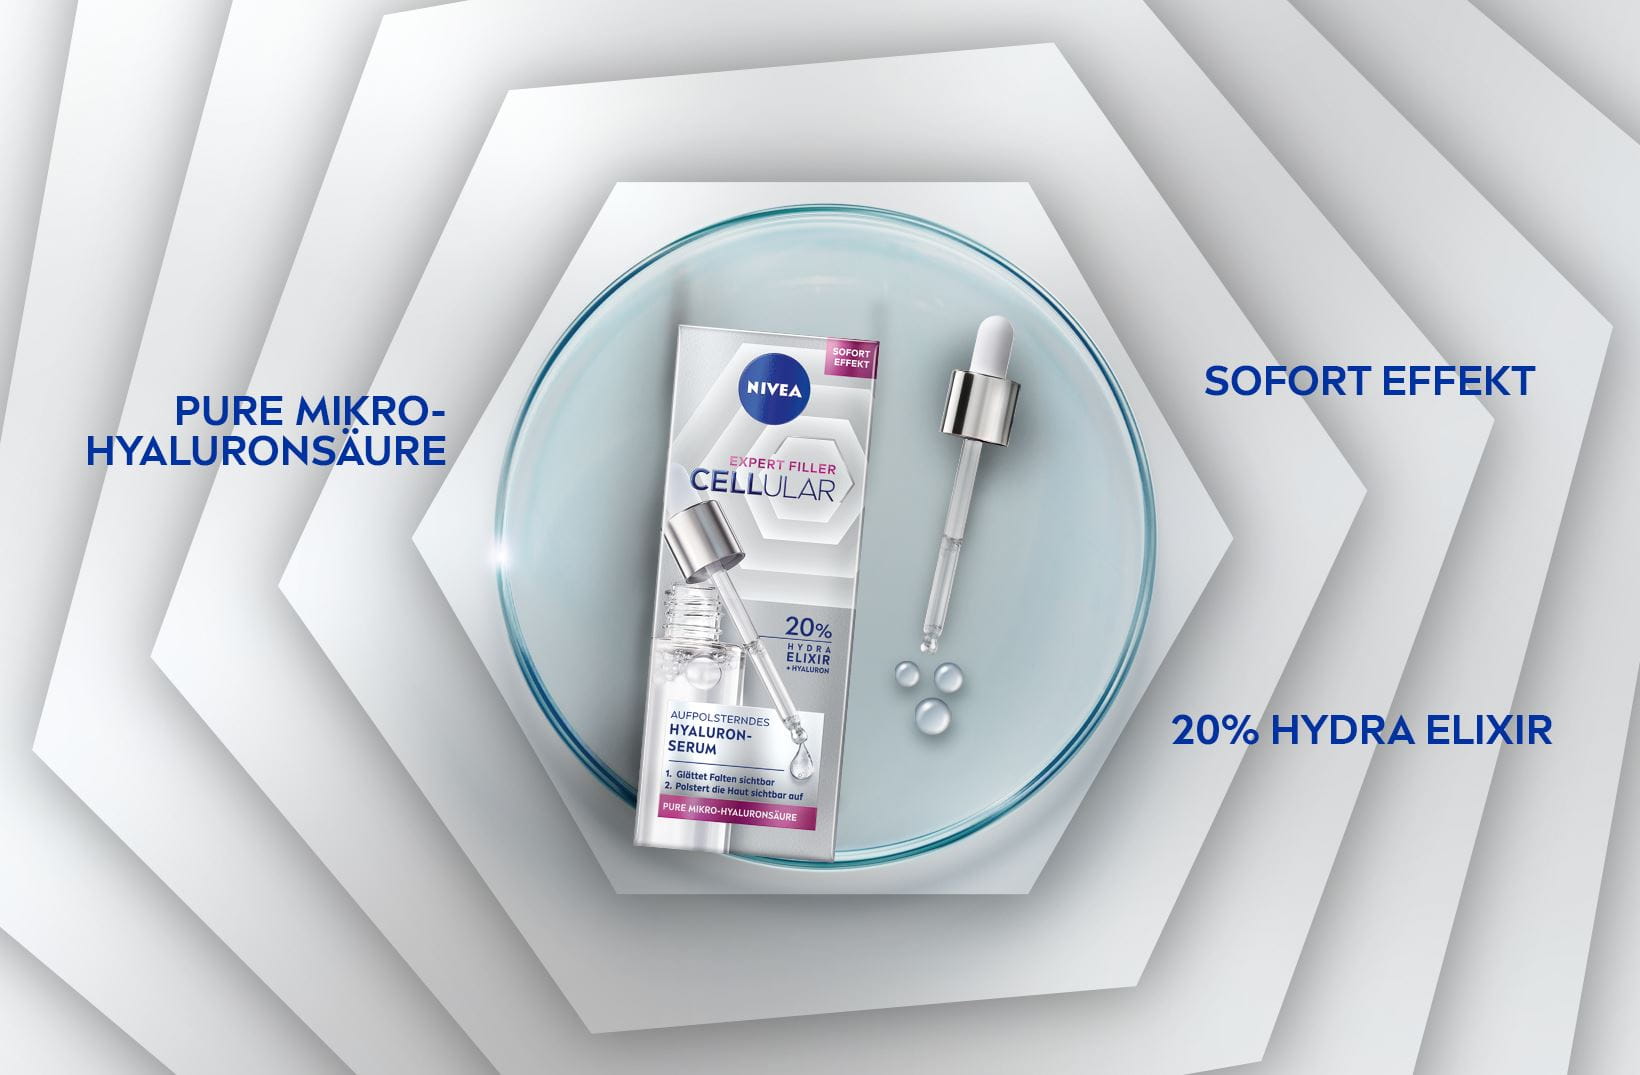 Hyaluronic acid serum packaging from Nivea